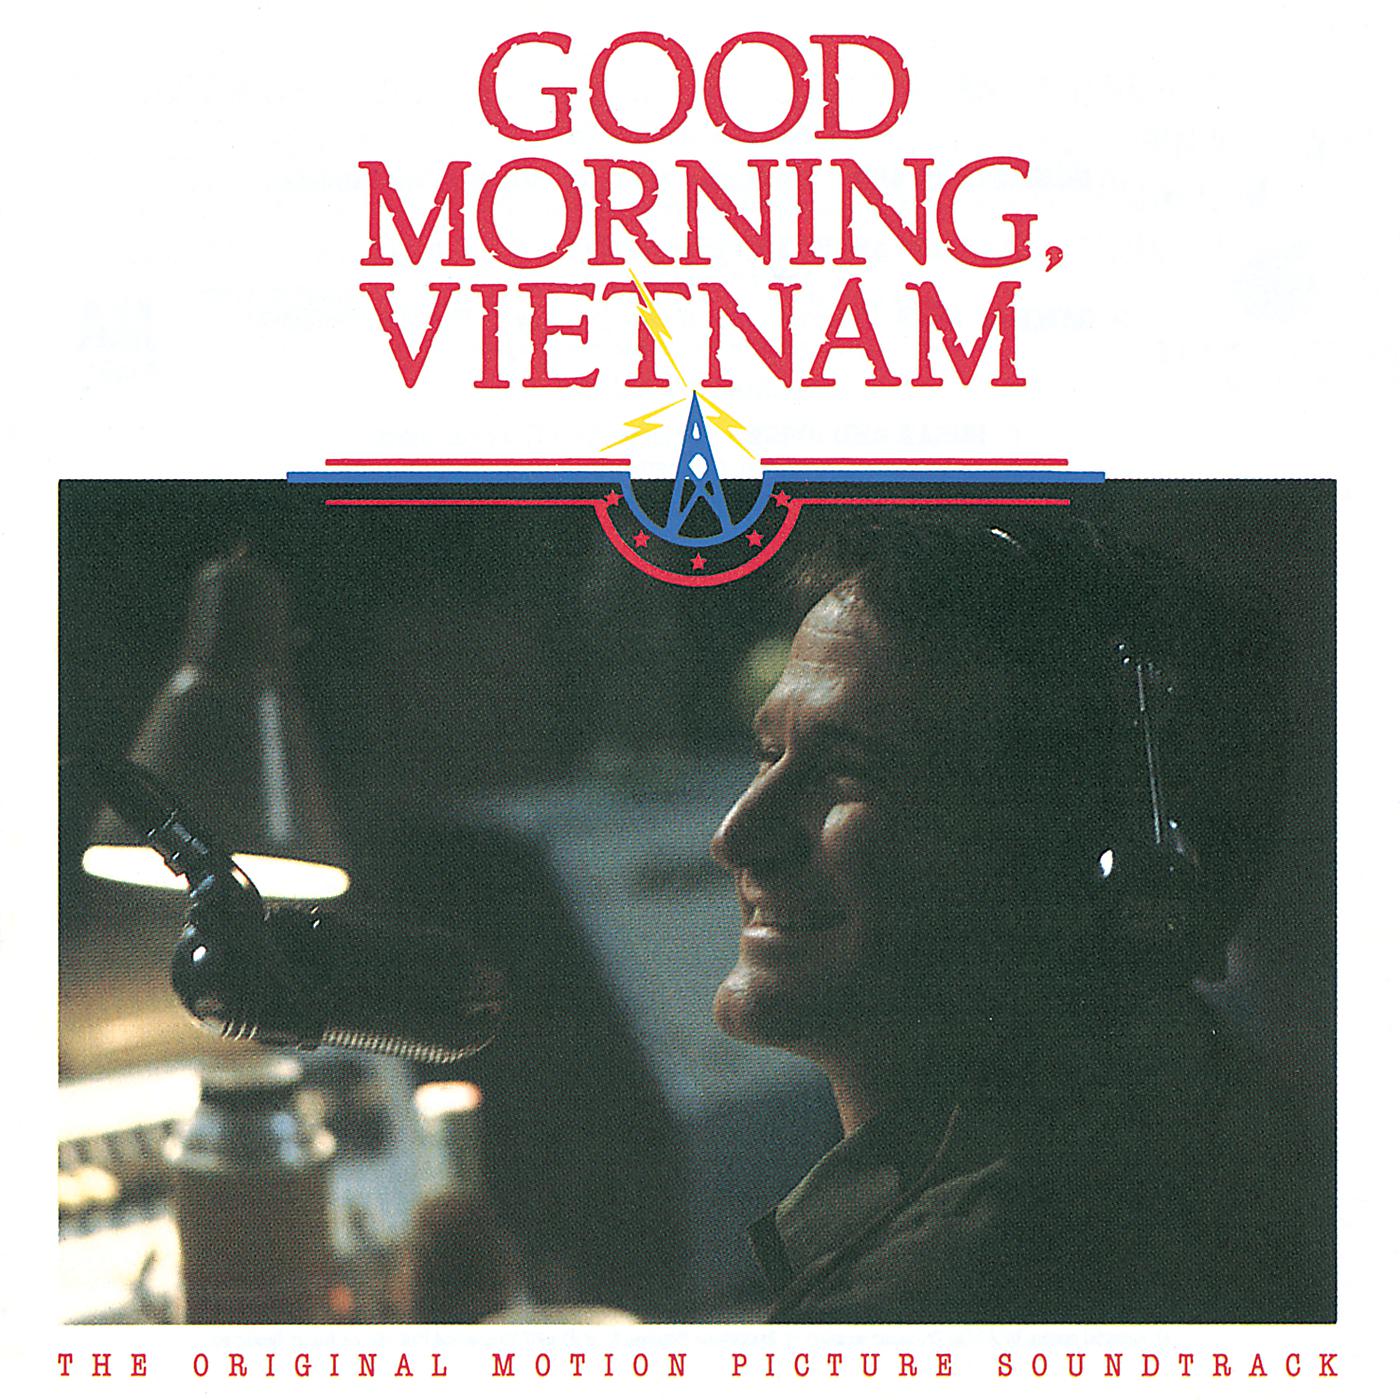 Good morning vietnam black. Гуд Монинг Вьетнам. Доброе утро Вьетнам. Good morning Vietnam Soundtrack.